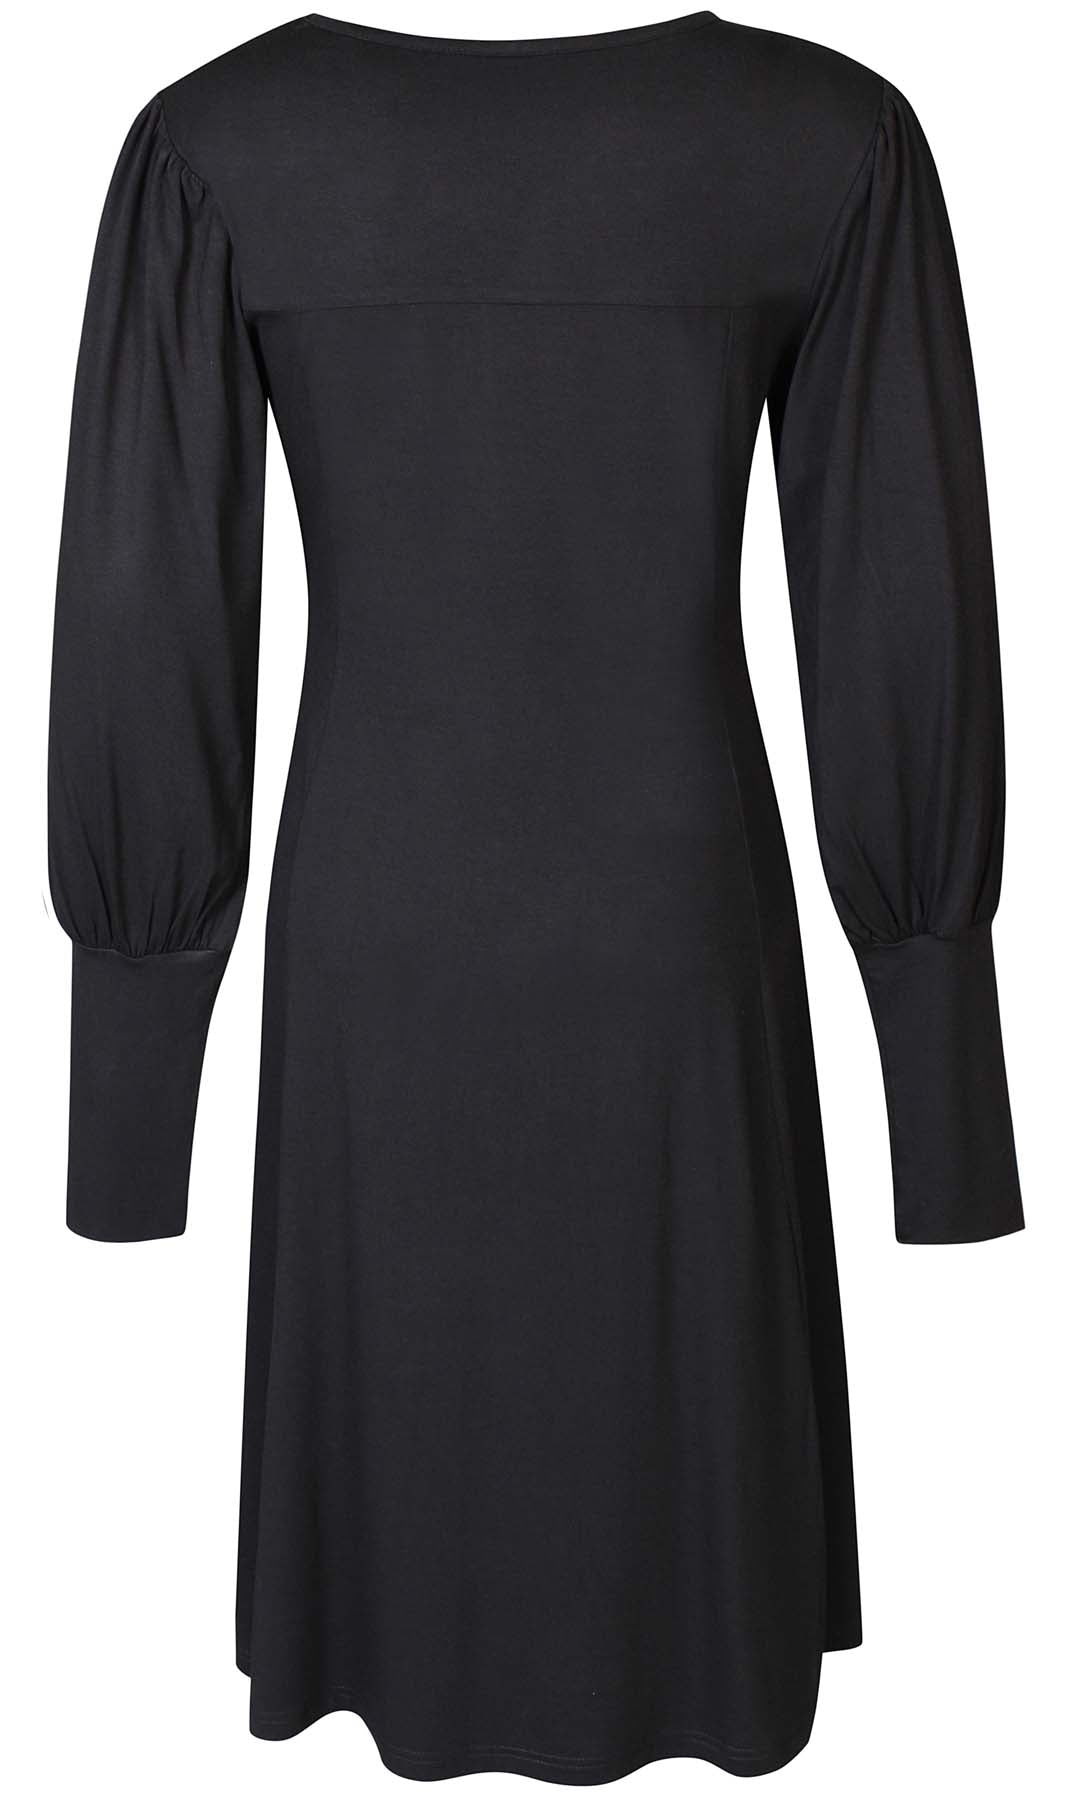 Elvina 089 - Dress - Black